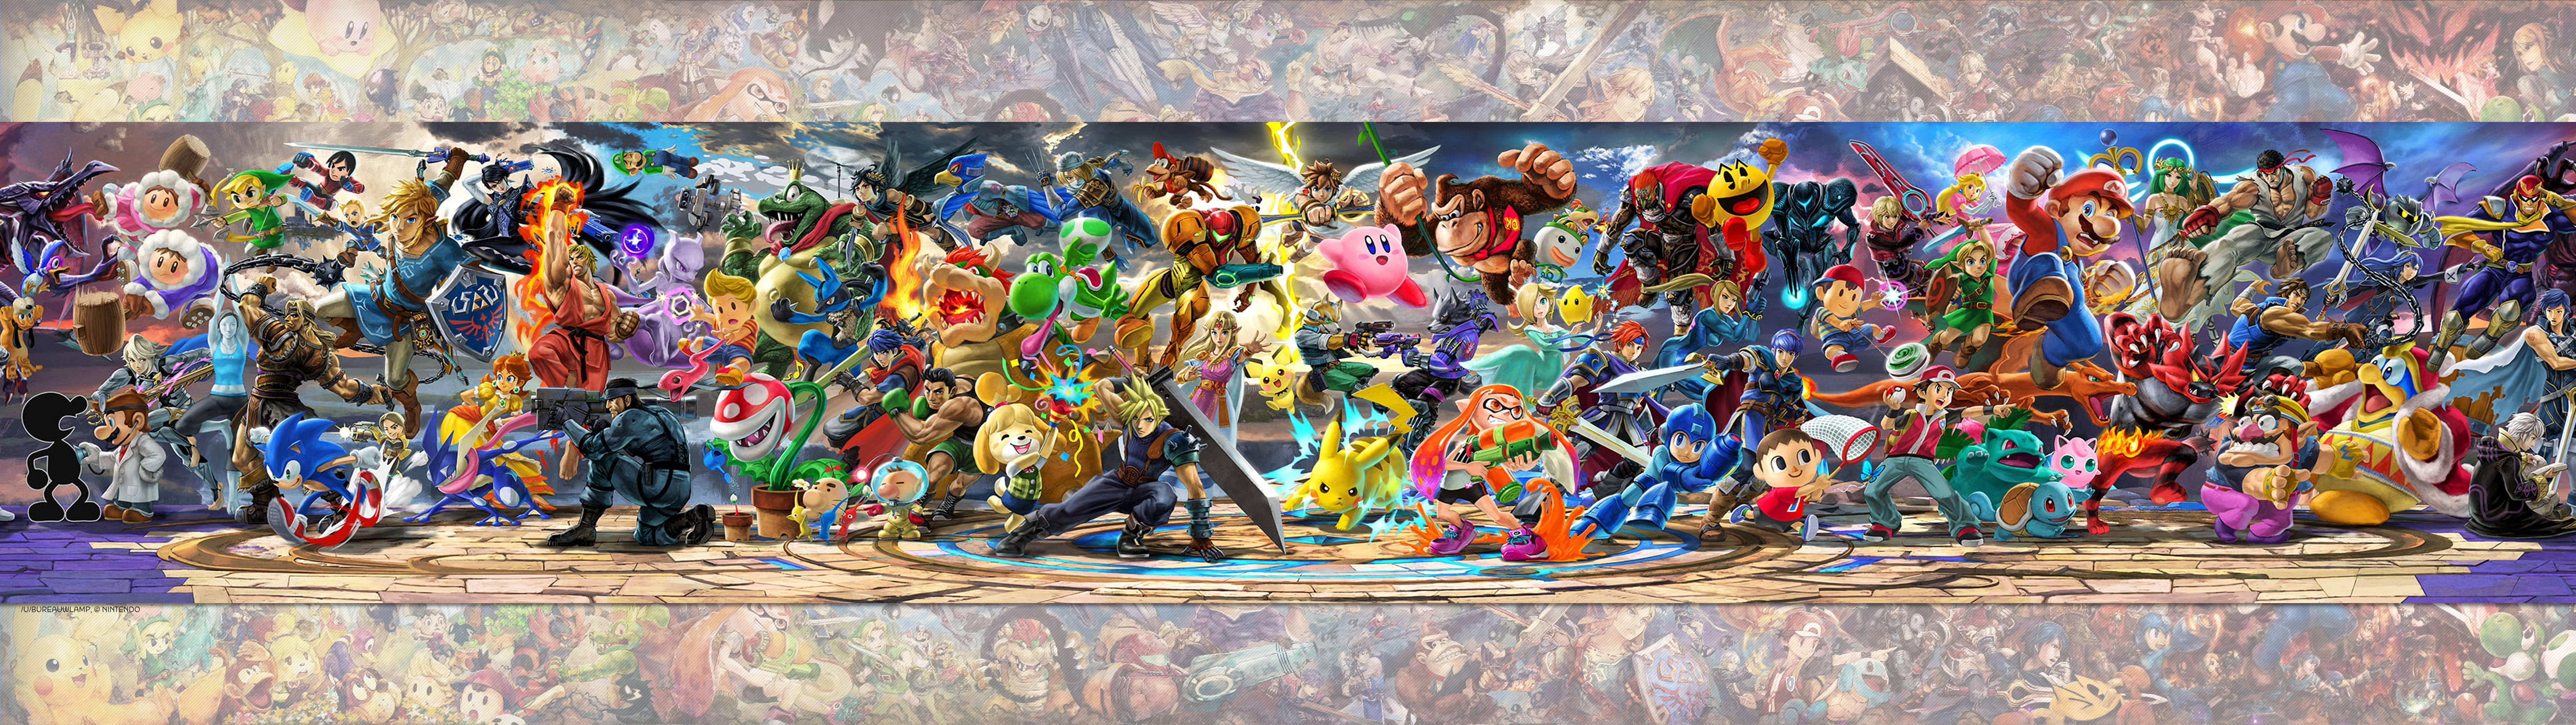 Smash Ultimate Panorama Background